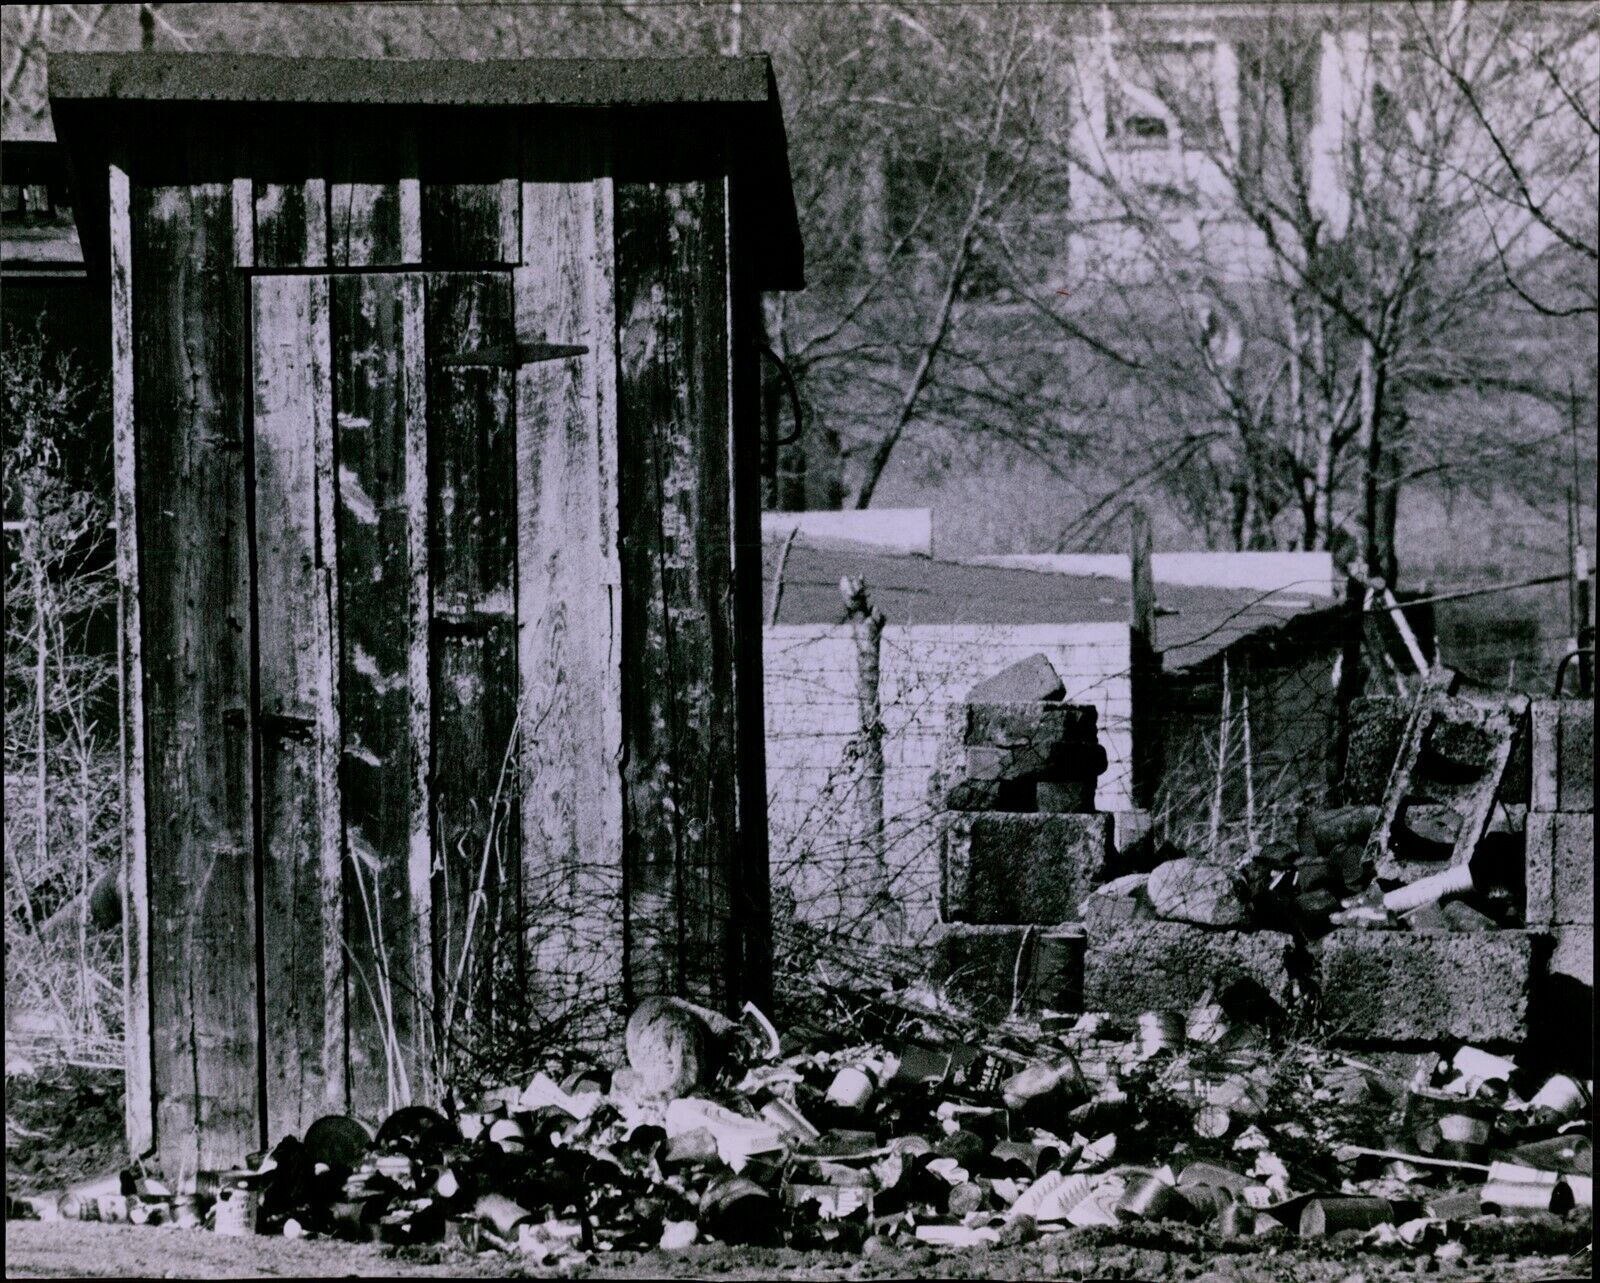 LG874 1961 Original Bill Johnson Photo CANS DUMPED AT HOUSEHOUSE Colorado Trash